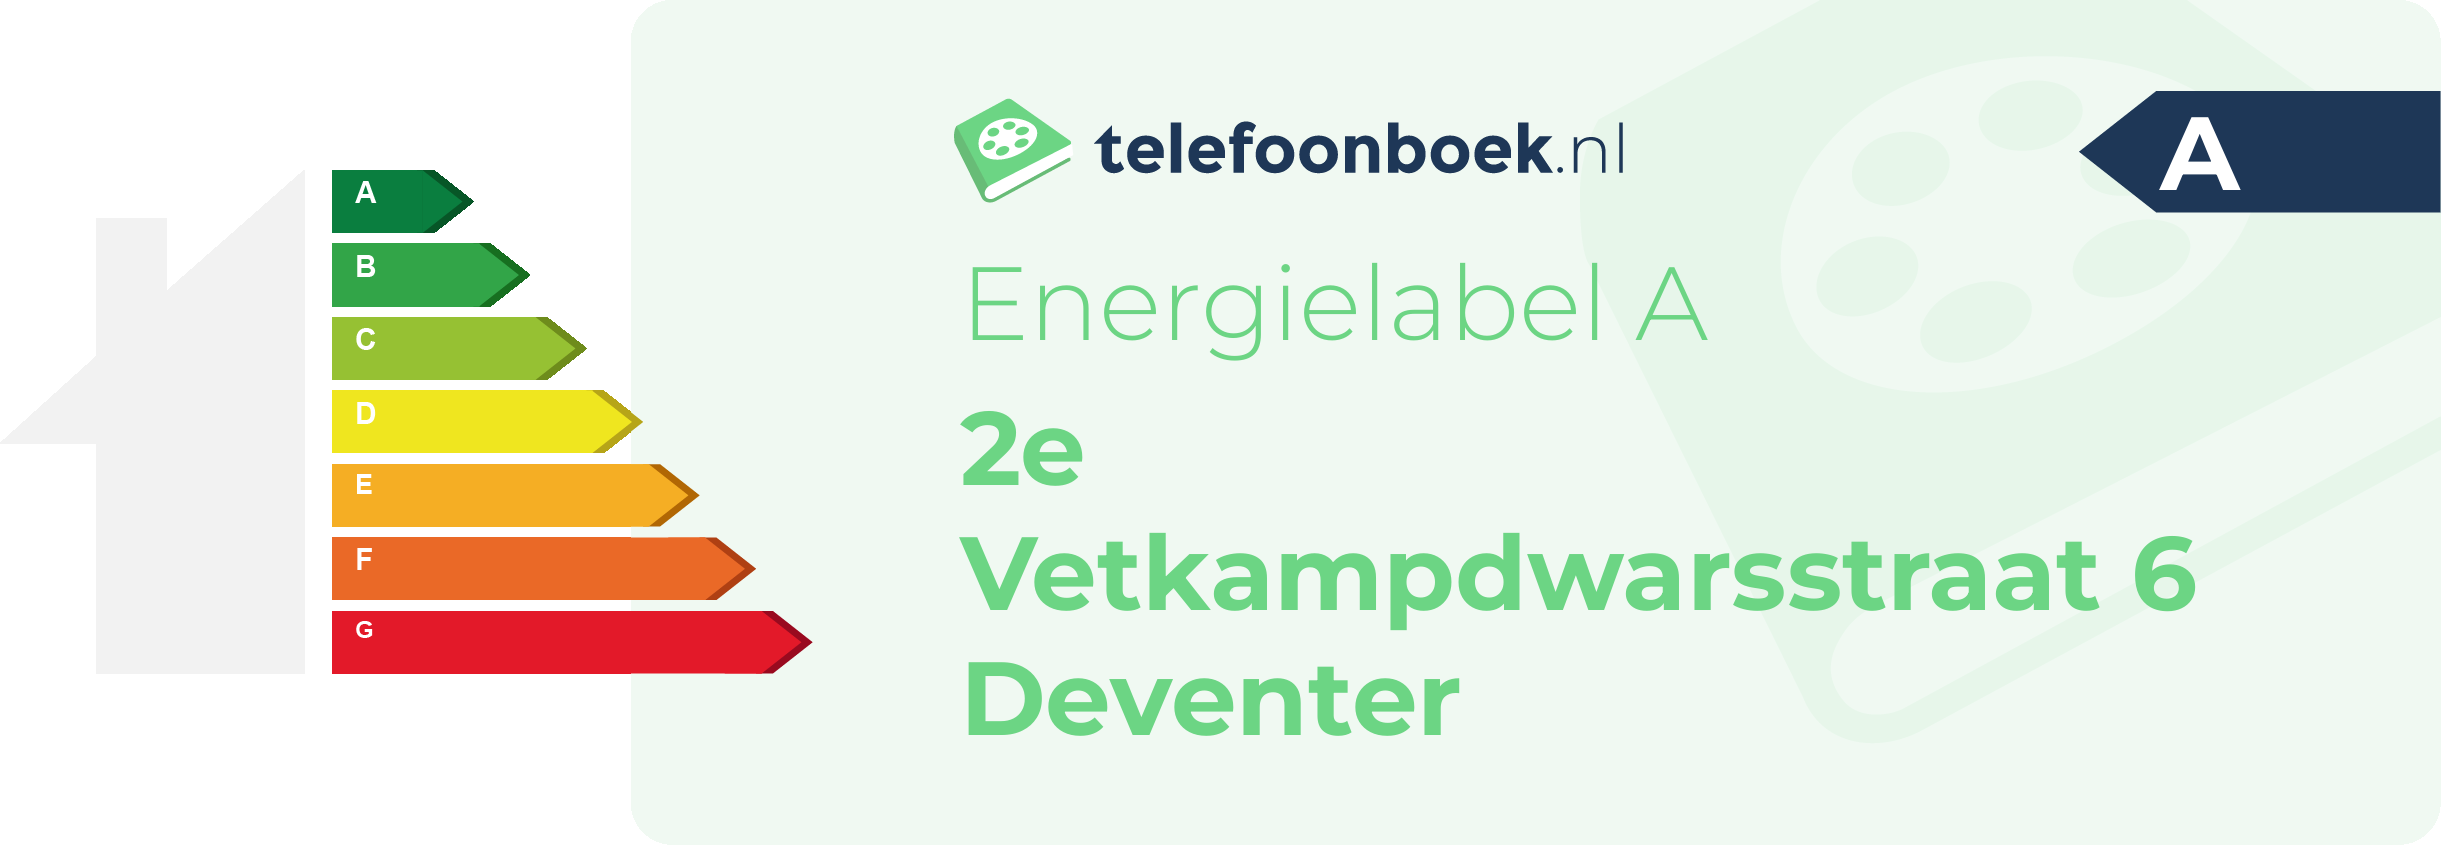 Energielabel 2e Vetkampdwarsstraat 6 Deventer